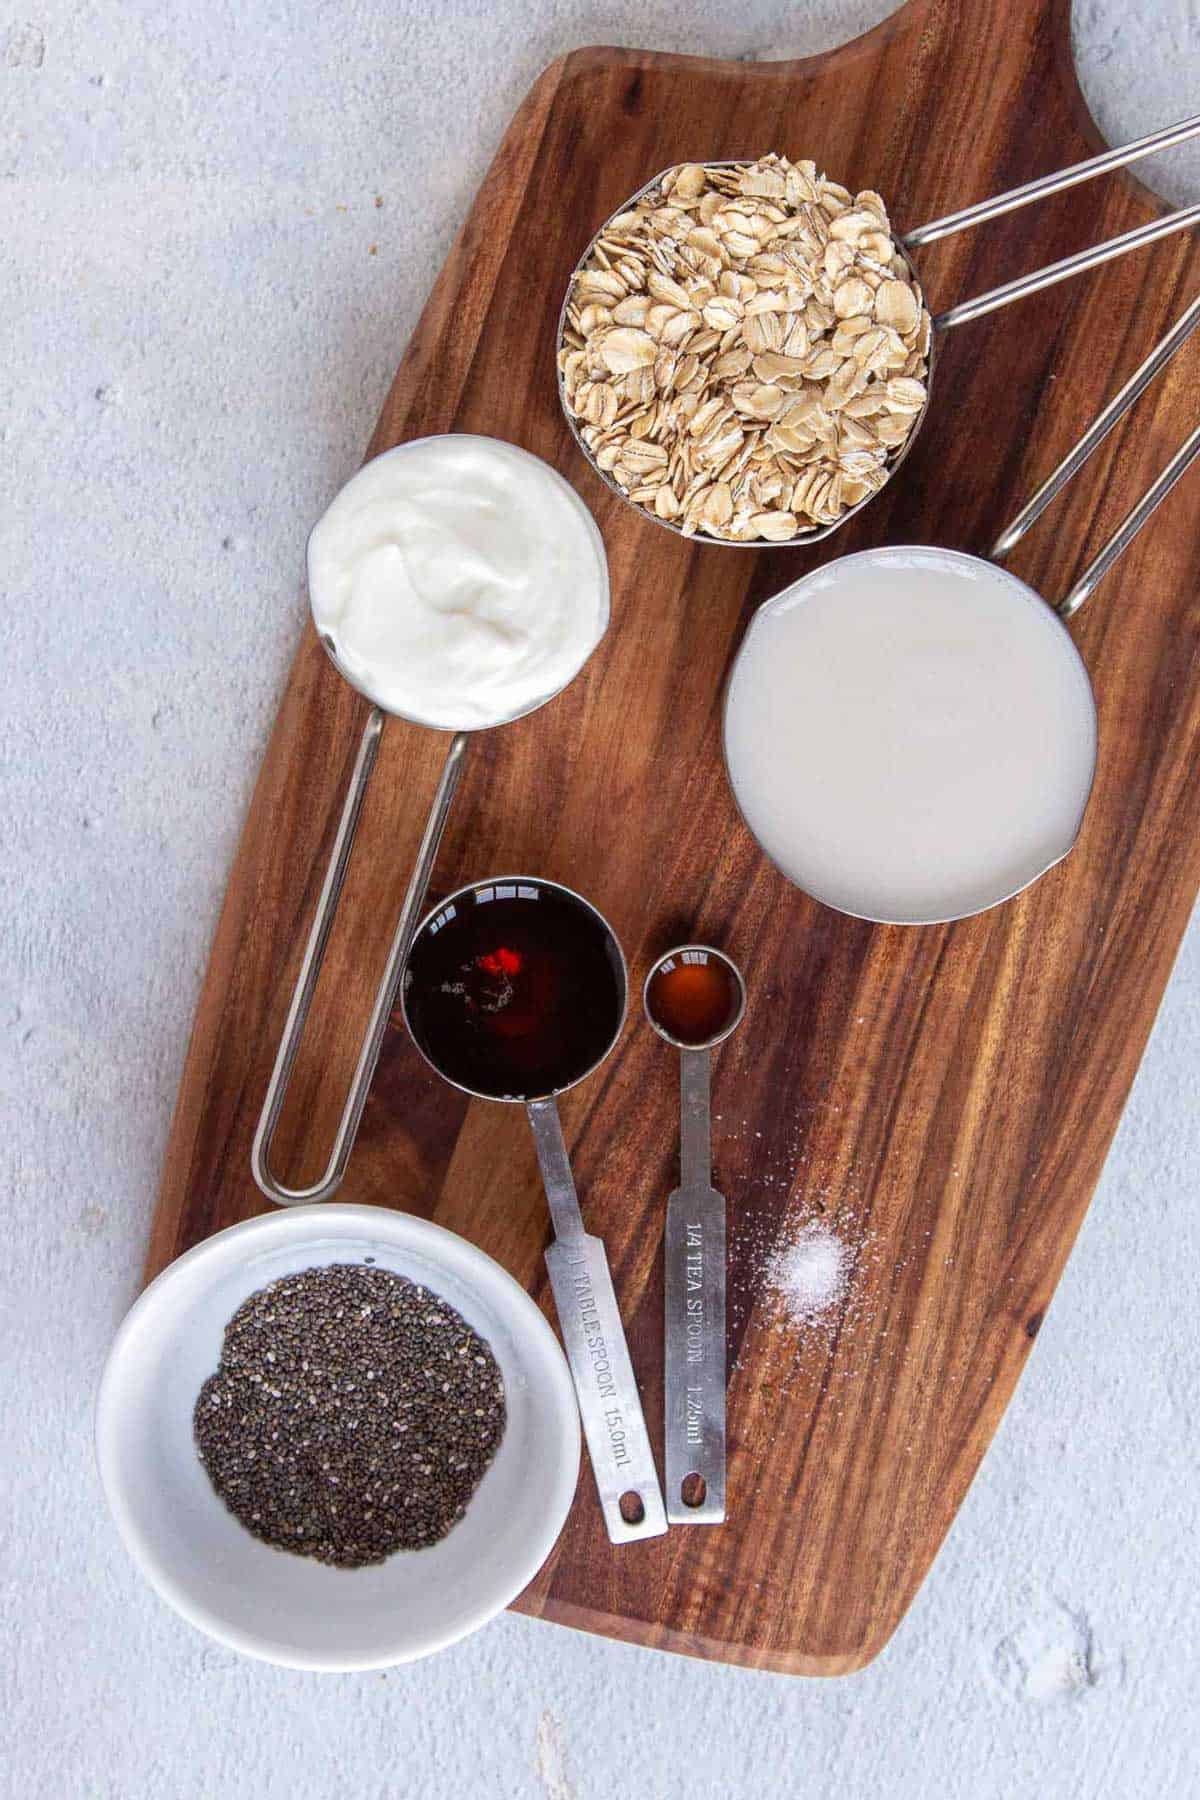 Vanilla overnight oats ingredients: old fashioned oats, milk, yogurt, chia seeds, maple syrup, vanilla, and salt.